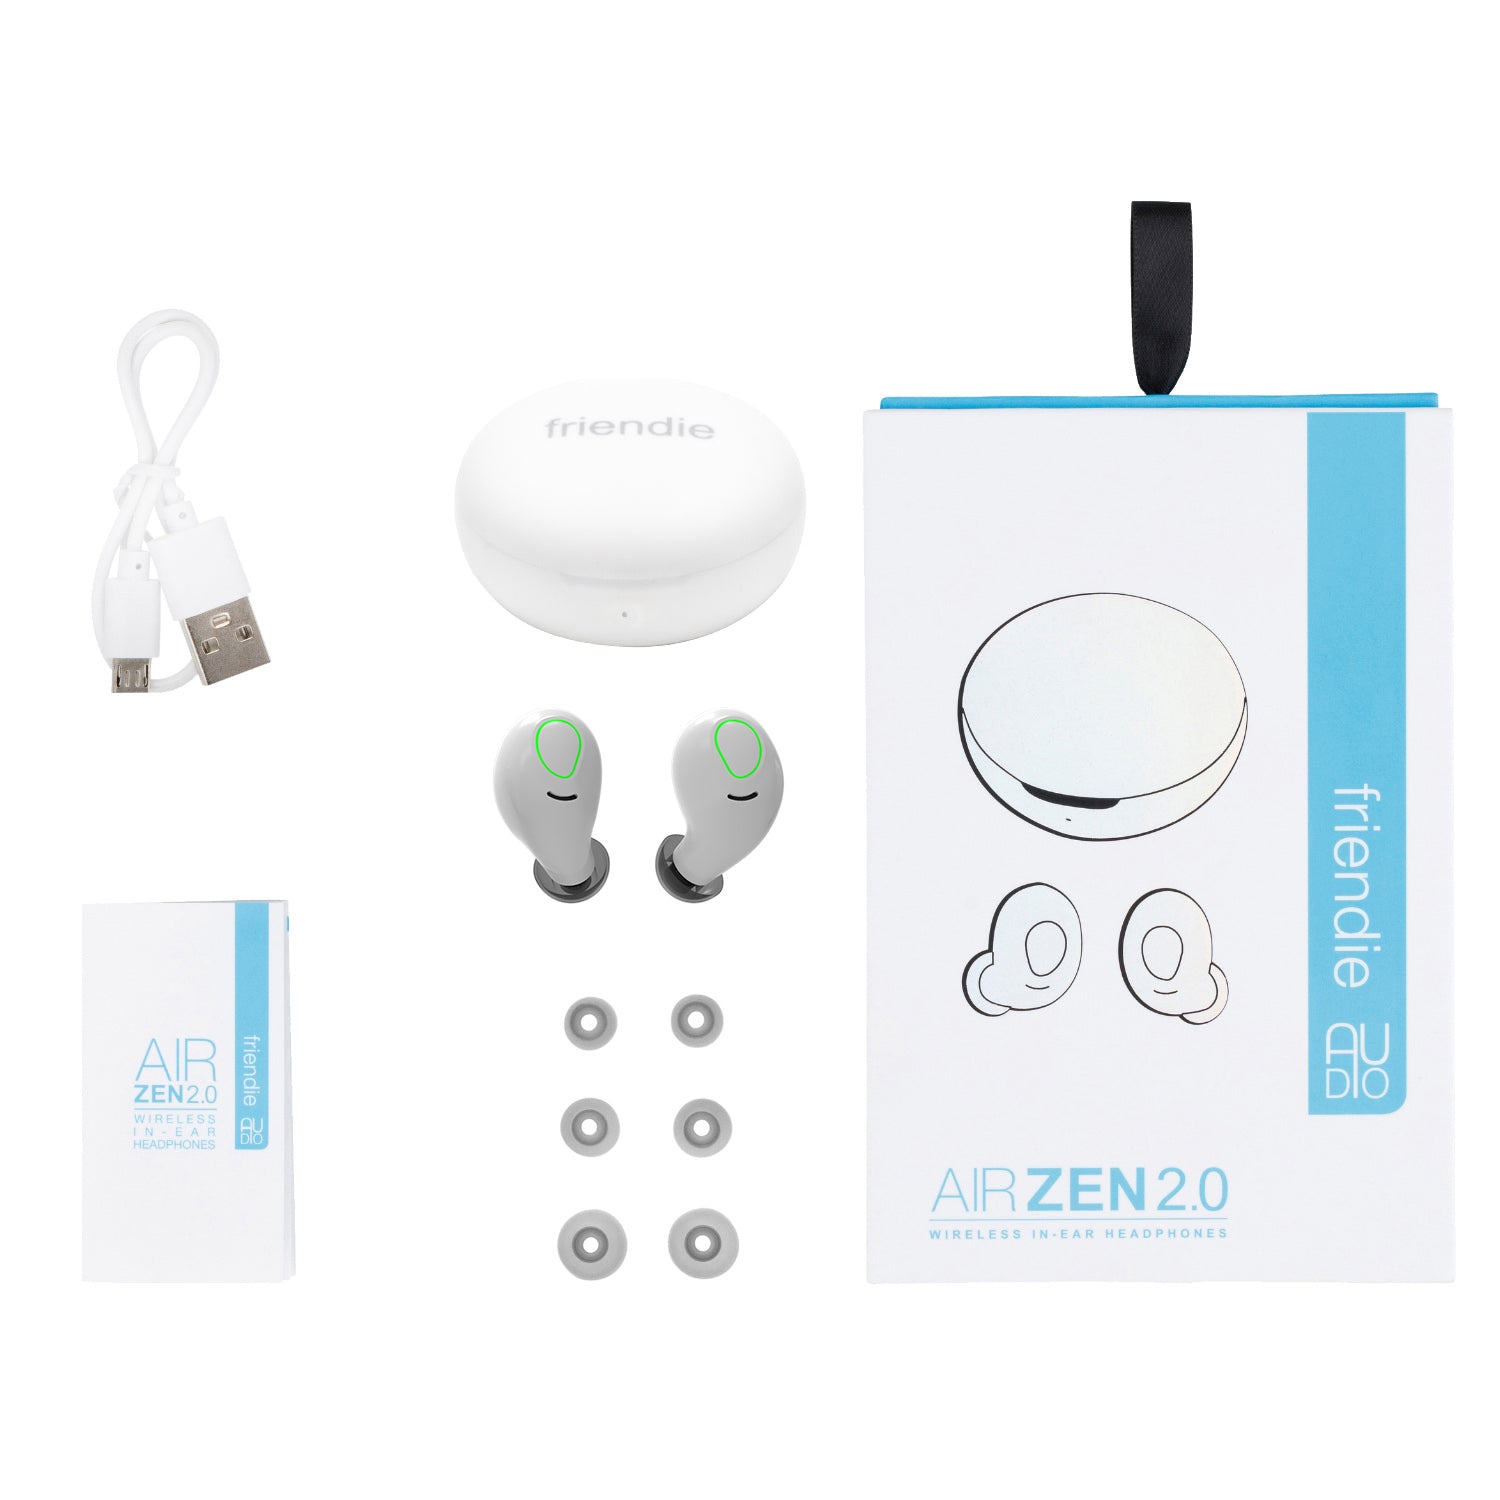 AIR ZEN 2.0 Pearl White and Rose Gold Earbuds (In Ear Wireless Headphones) - Grade C - Friendie Audio Pty Ltd